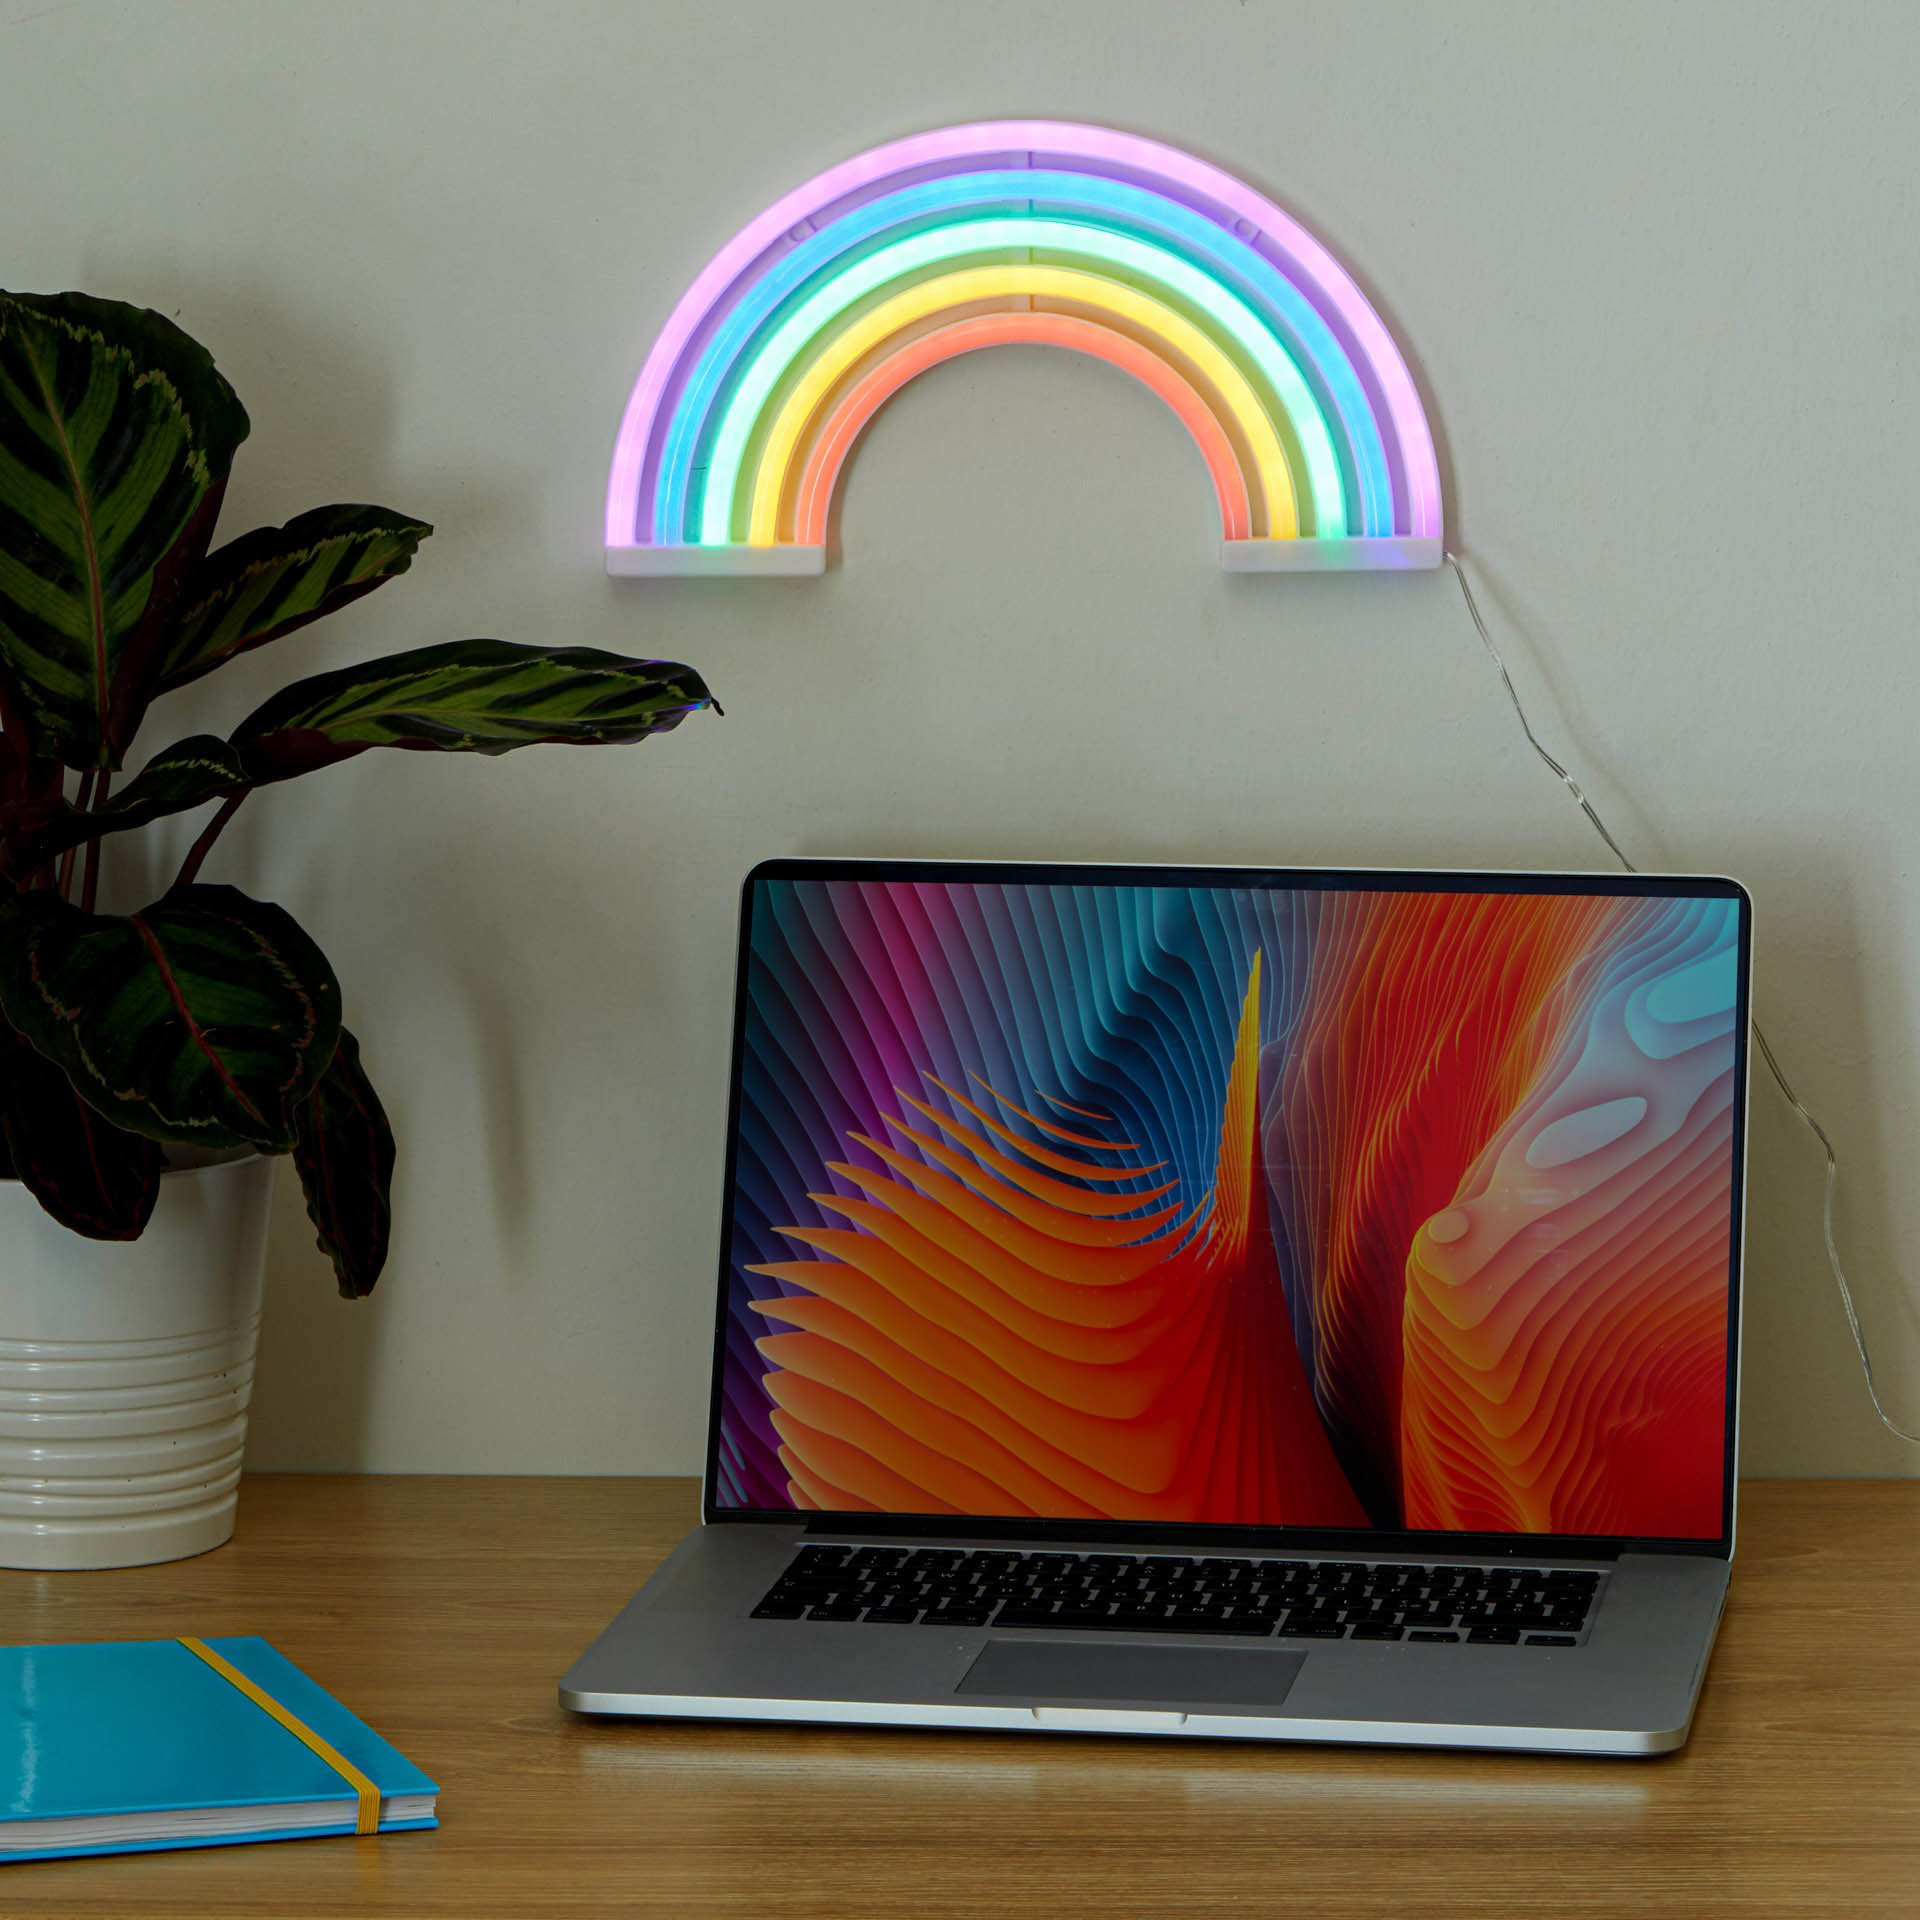 Lampada con base a neon a forma di arcobaleno con LED.